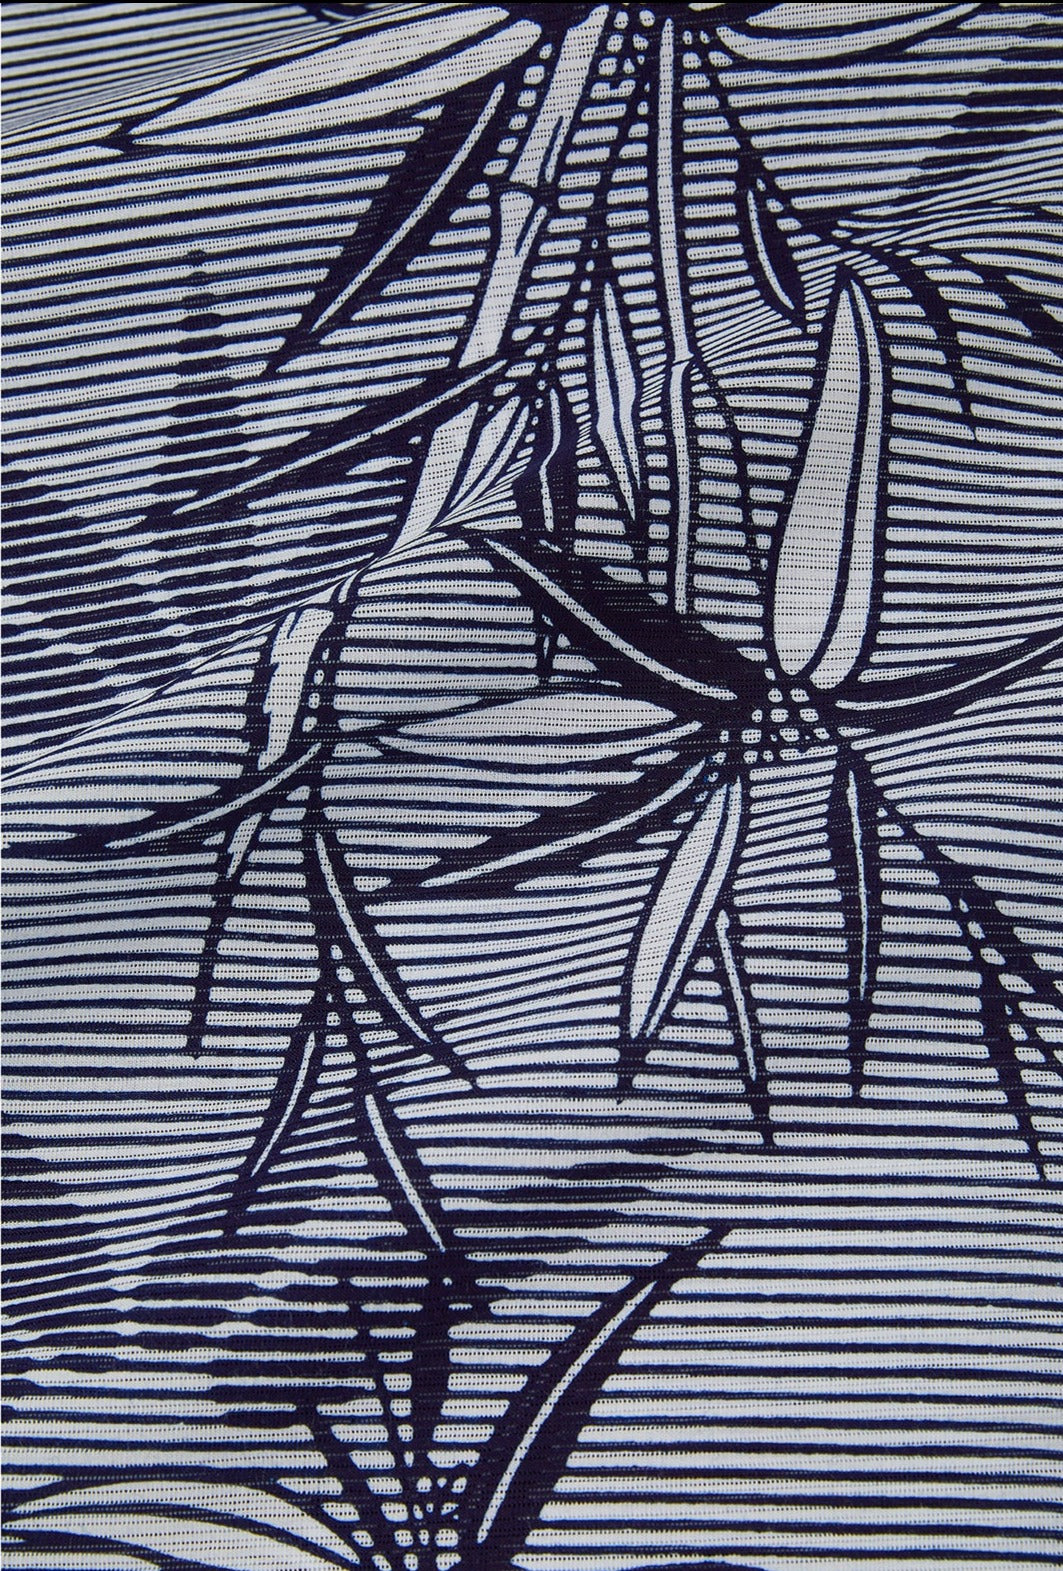 Yukata sheeting silk [horizontal stripes and bamboo grass]